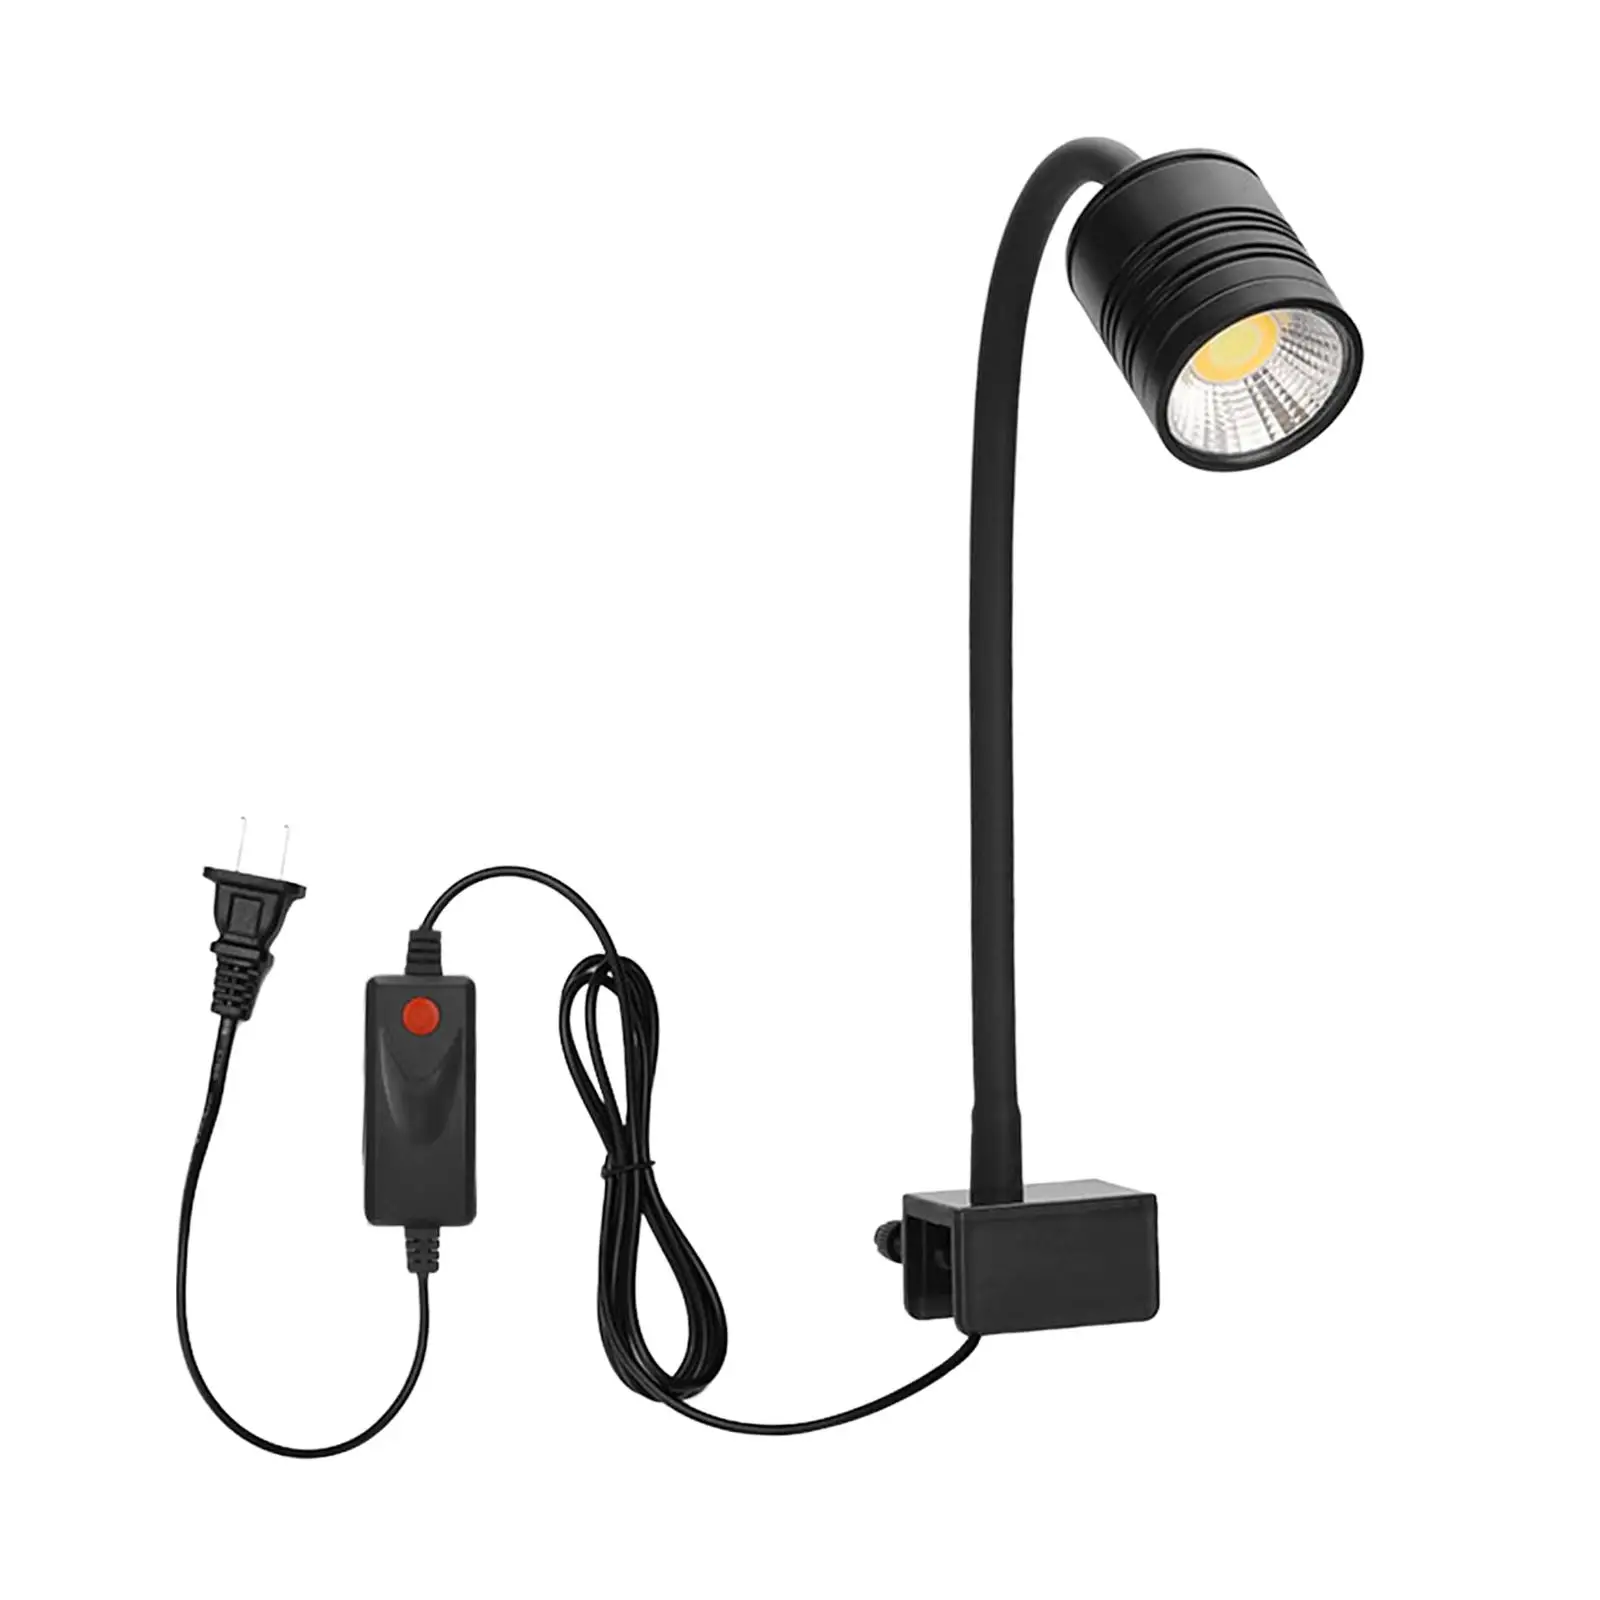 Aquarium Light Practical Easy Installation LED Lamp Sturdy Dimmable Clip on Adjustable US Plug Downlight for Desktop Home Decor